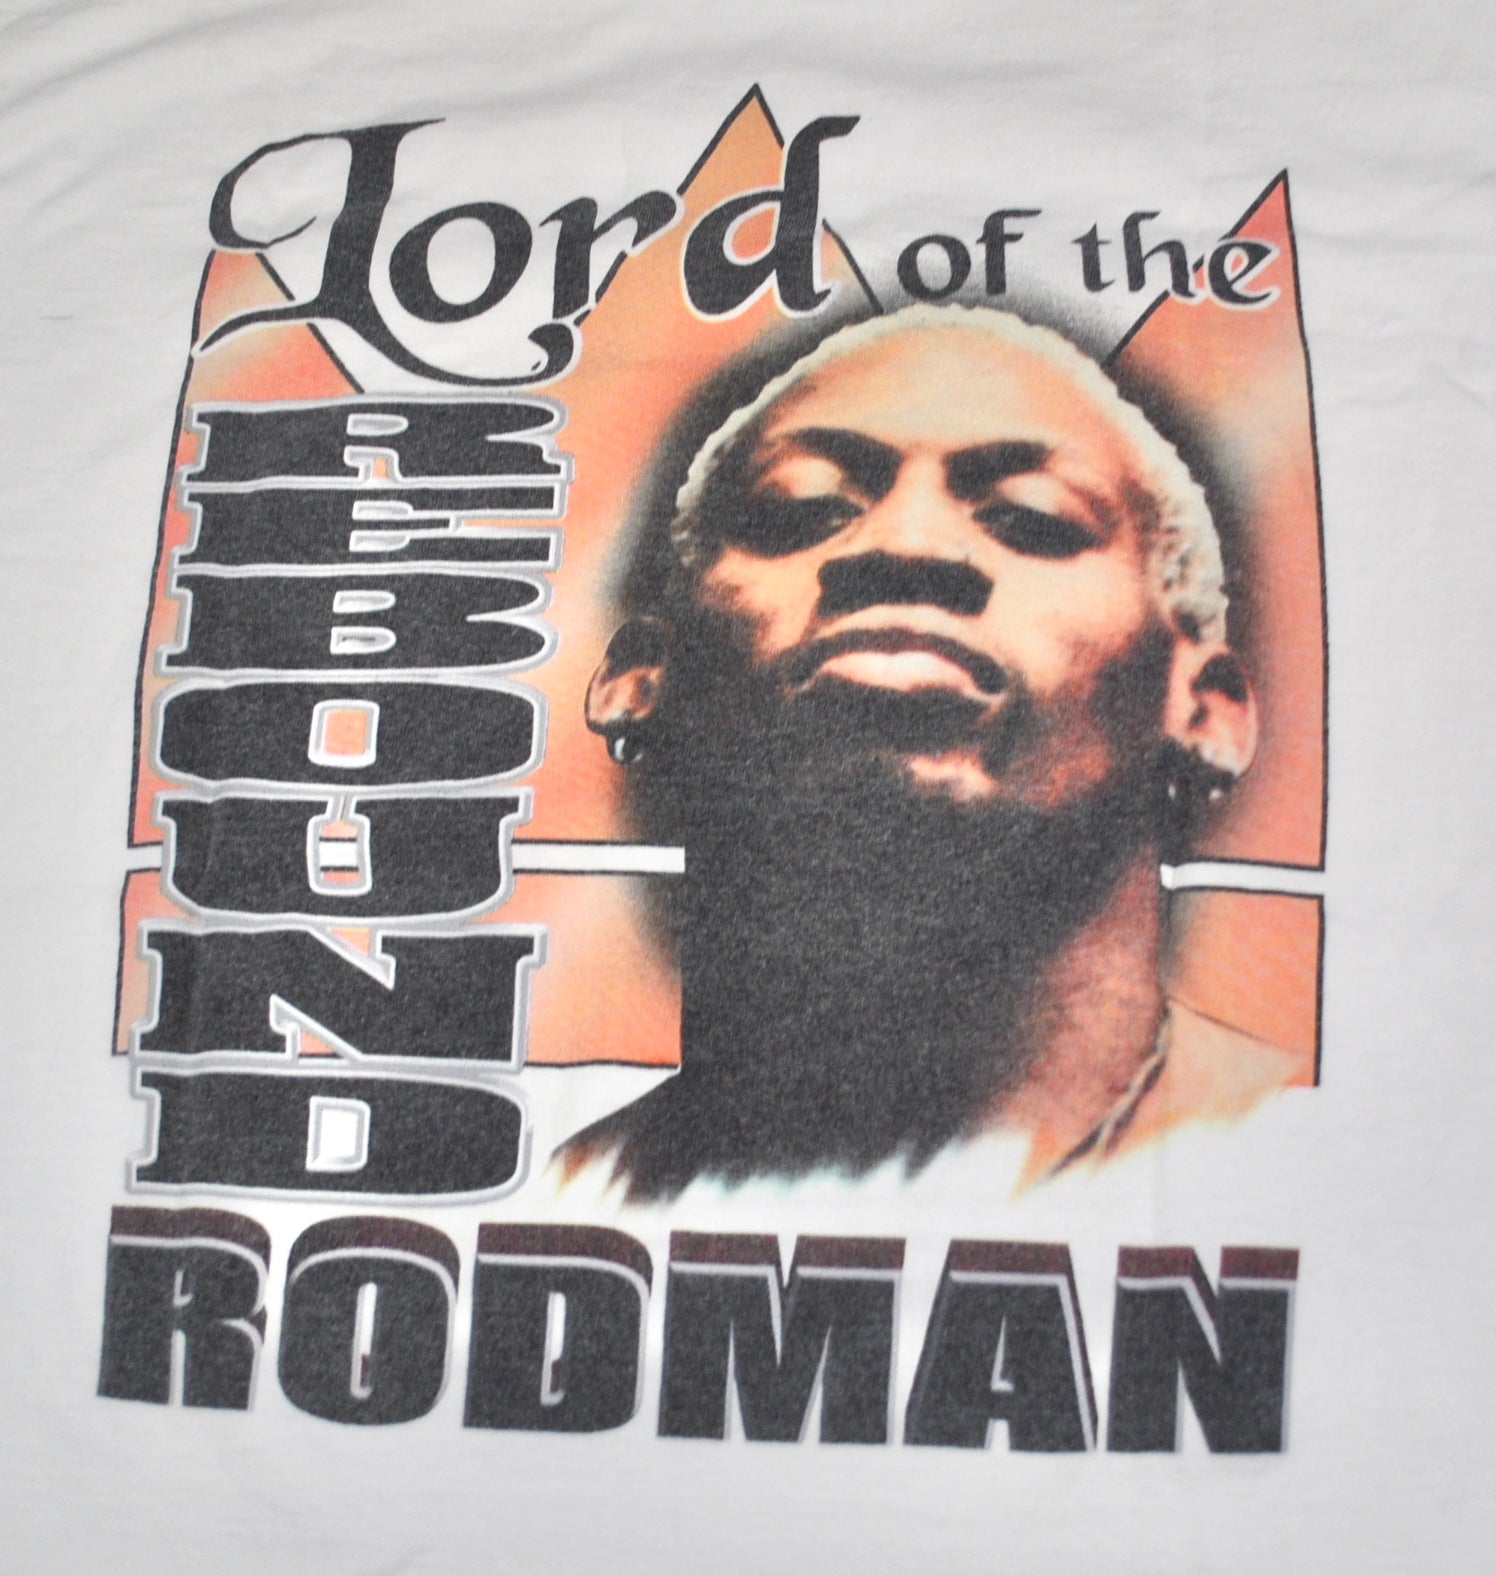 Vintage Dennis Rodman Chicago bulls t shirt